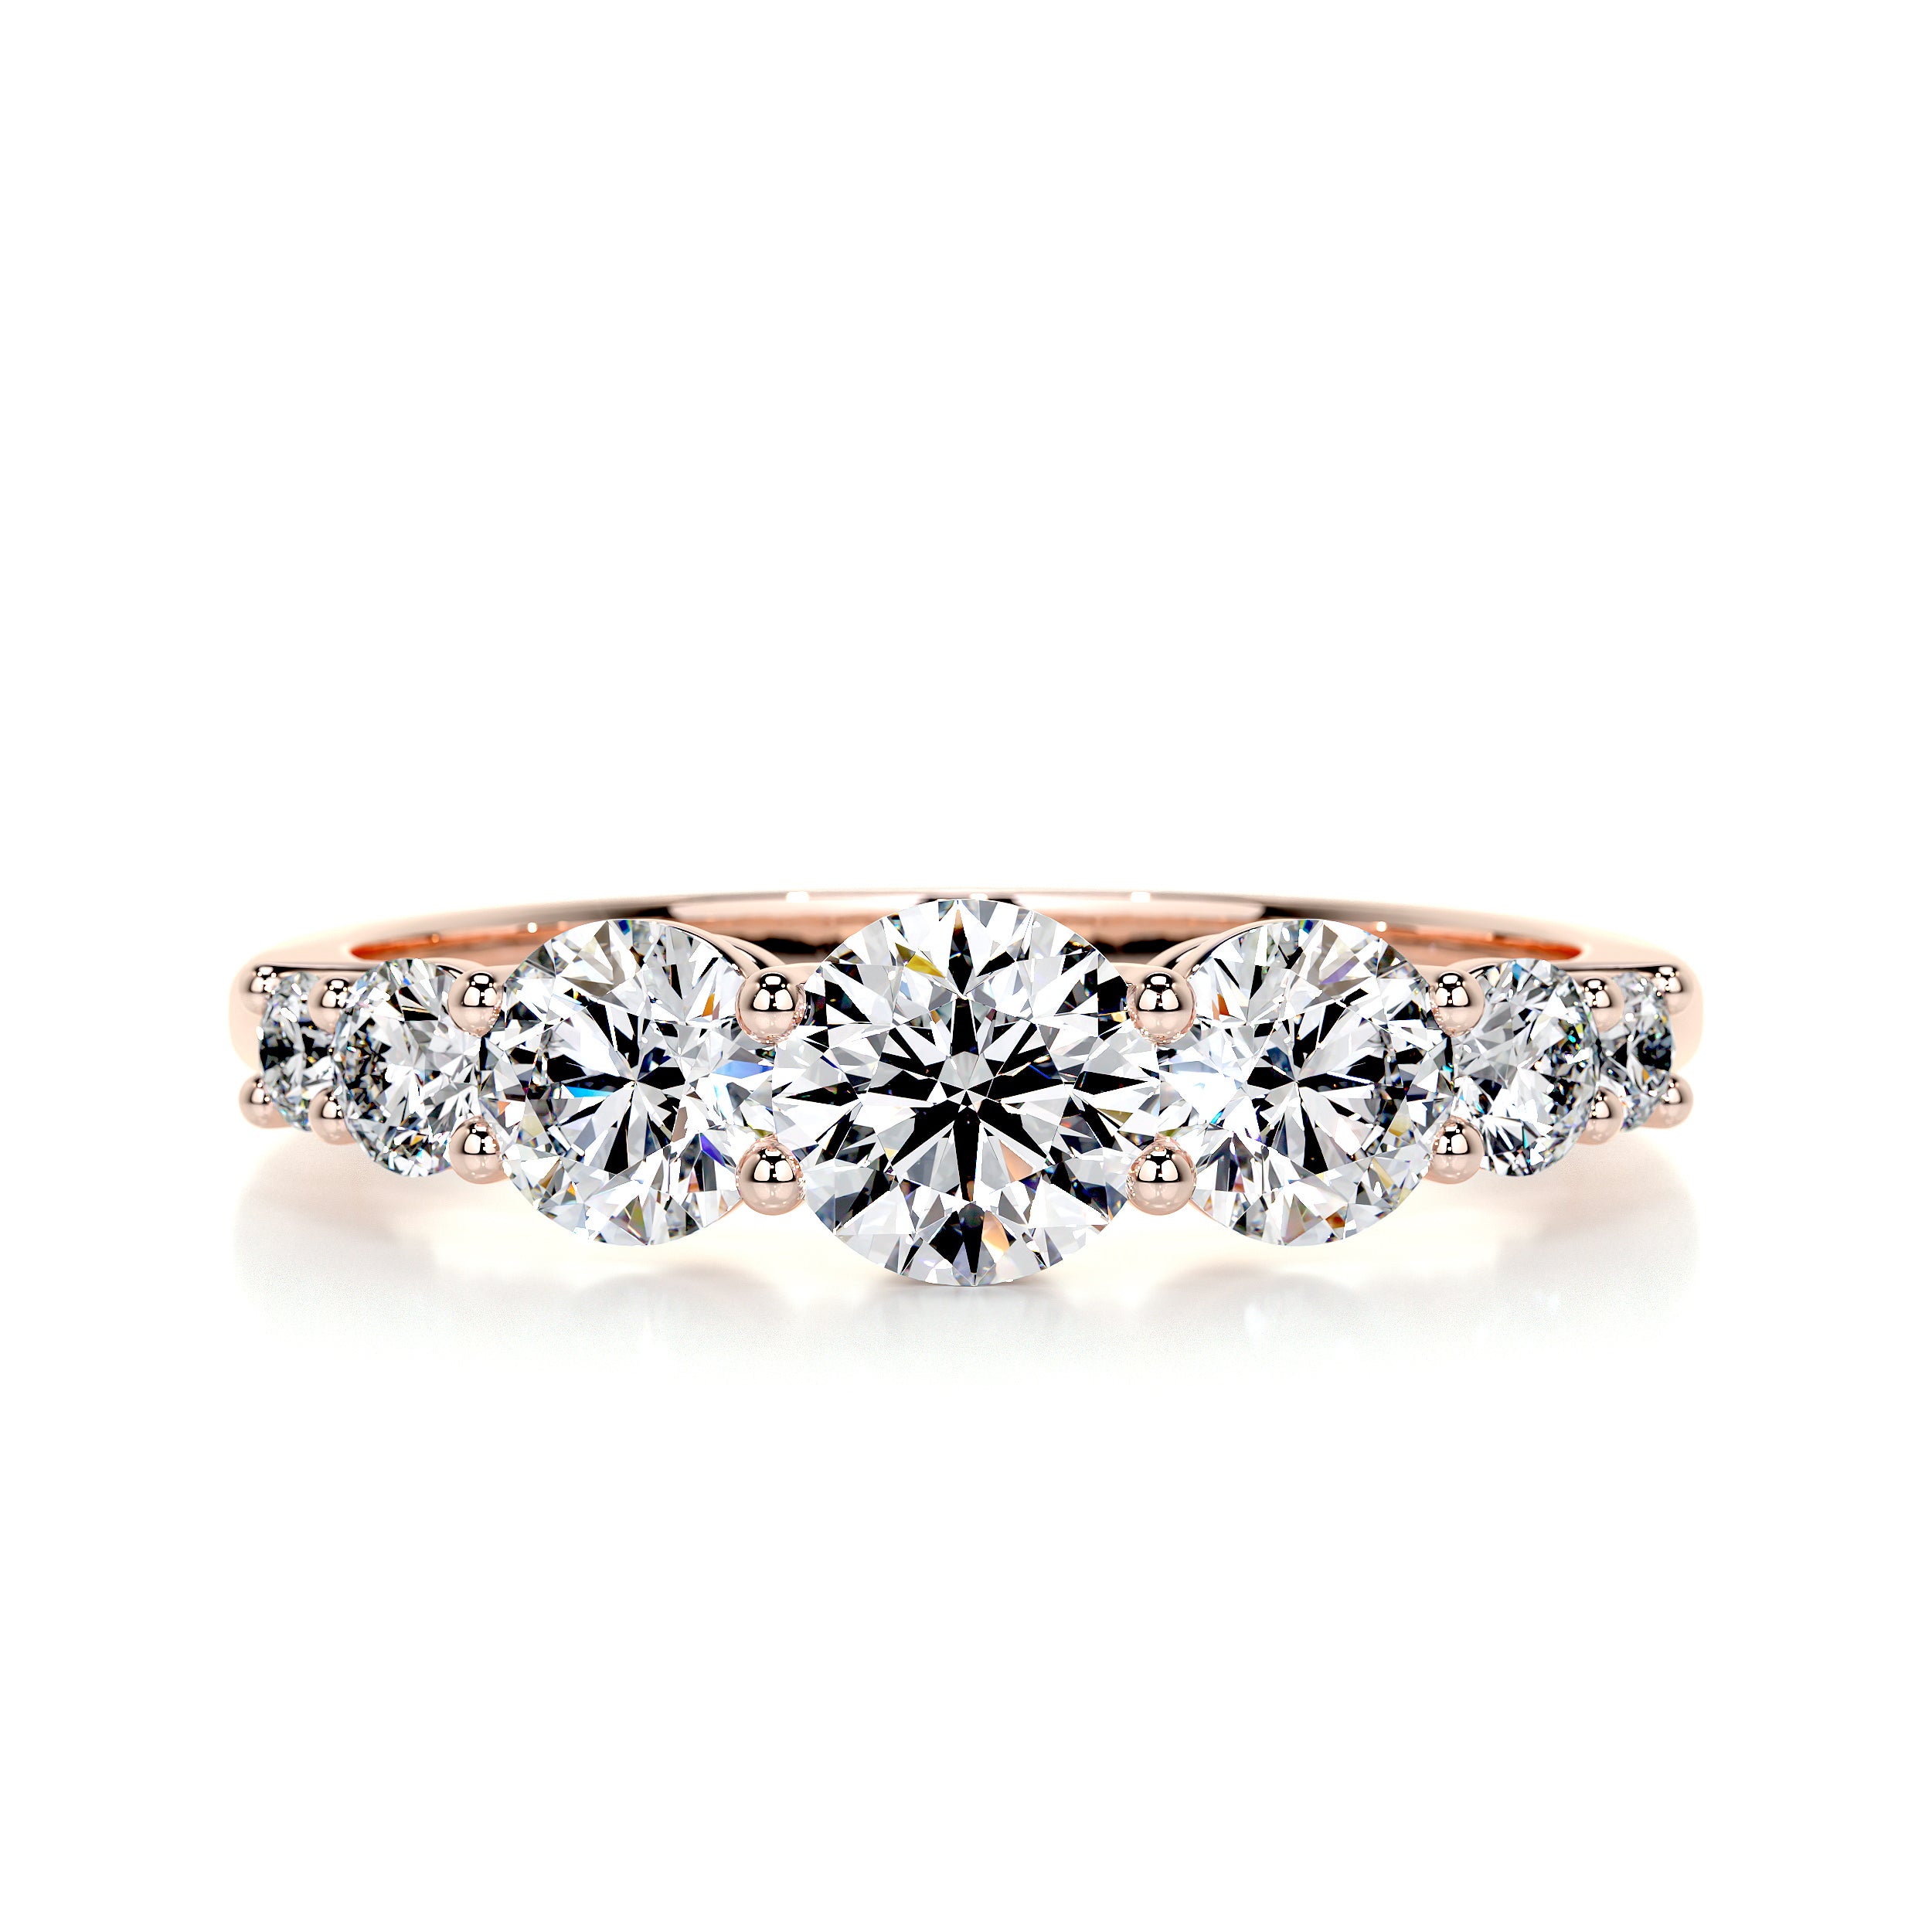 Makenzi Diamond Engagement Ring   (1.50 Carat) -14K Rose Gold